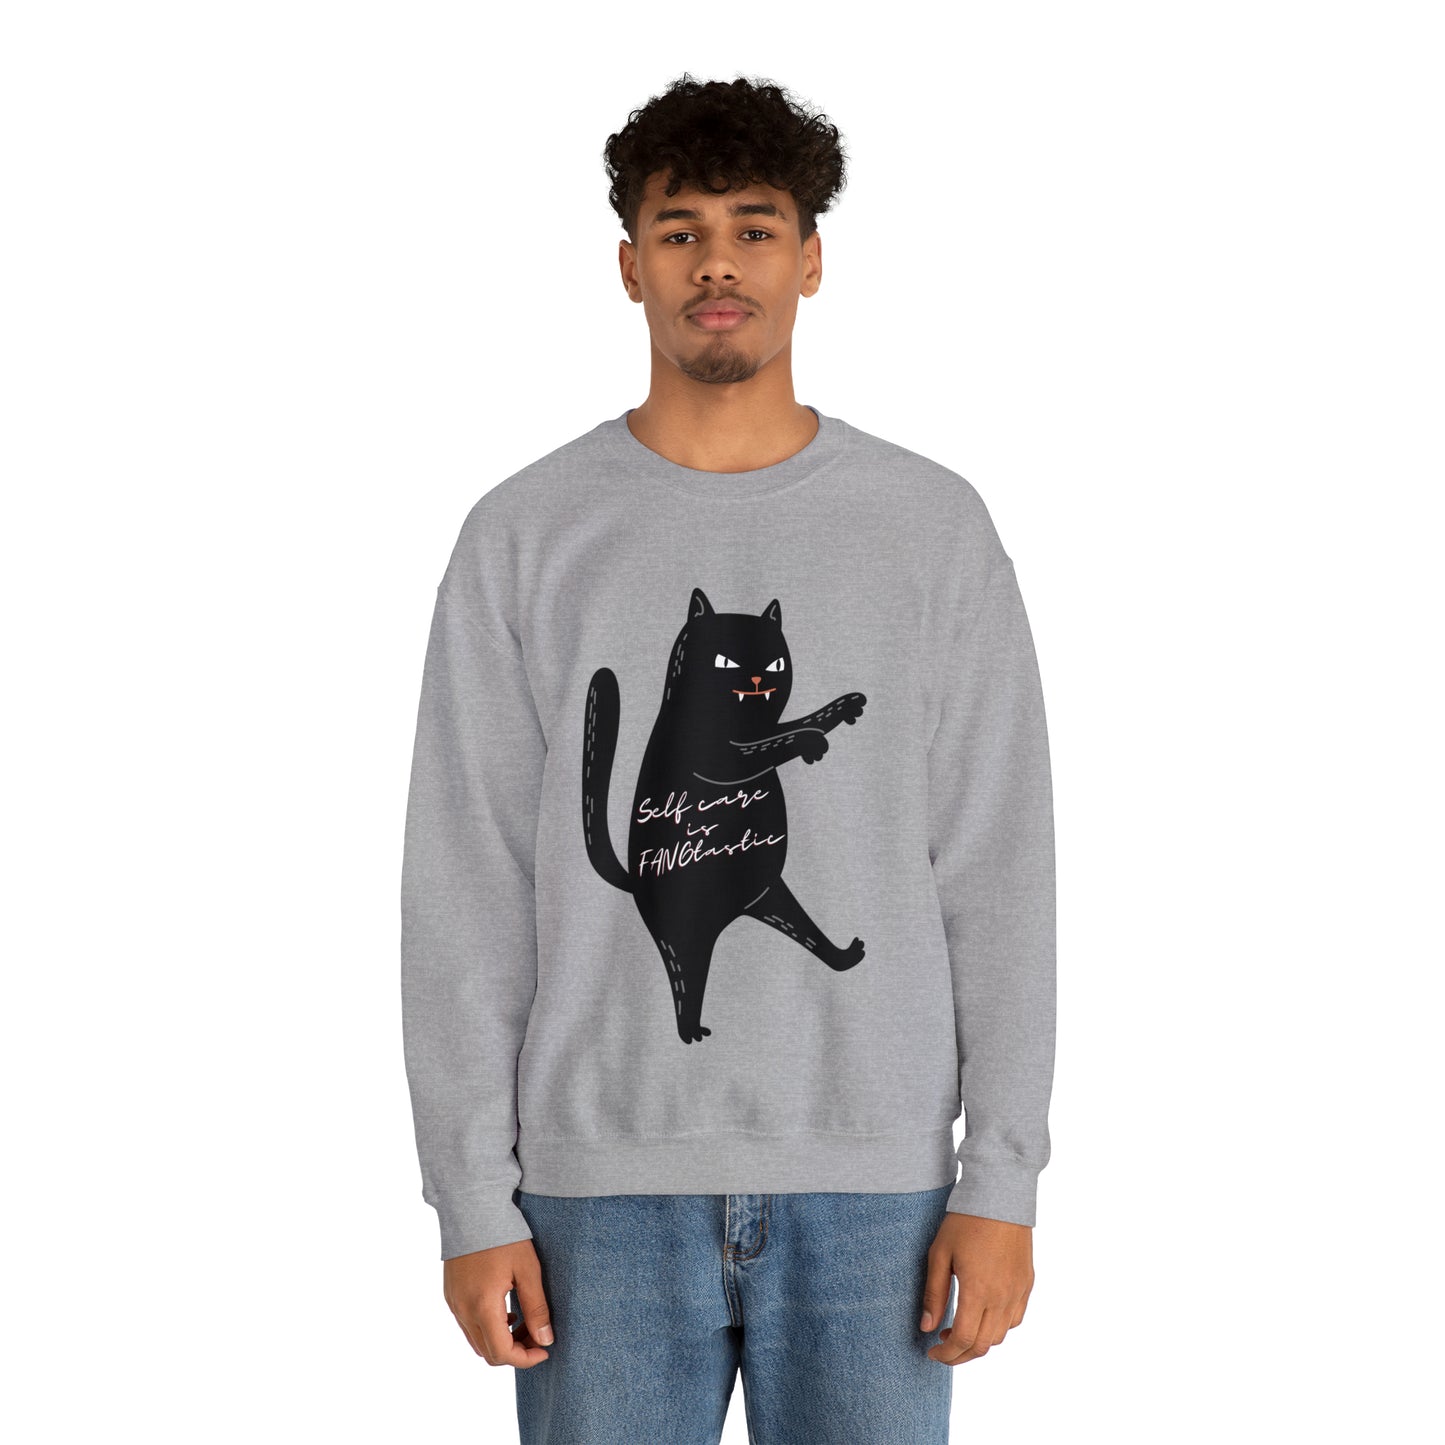 Black Cat is Fangtastic Crewneck Sweatshirt